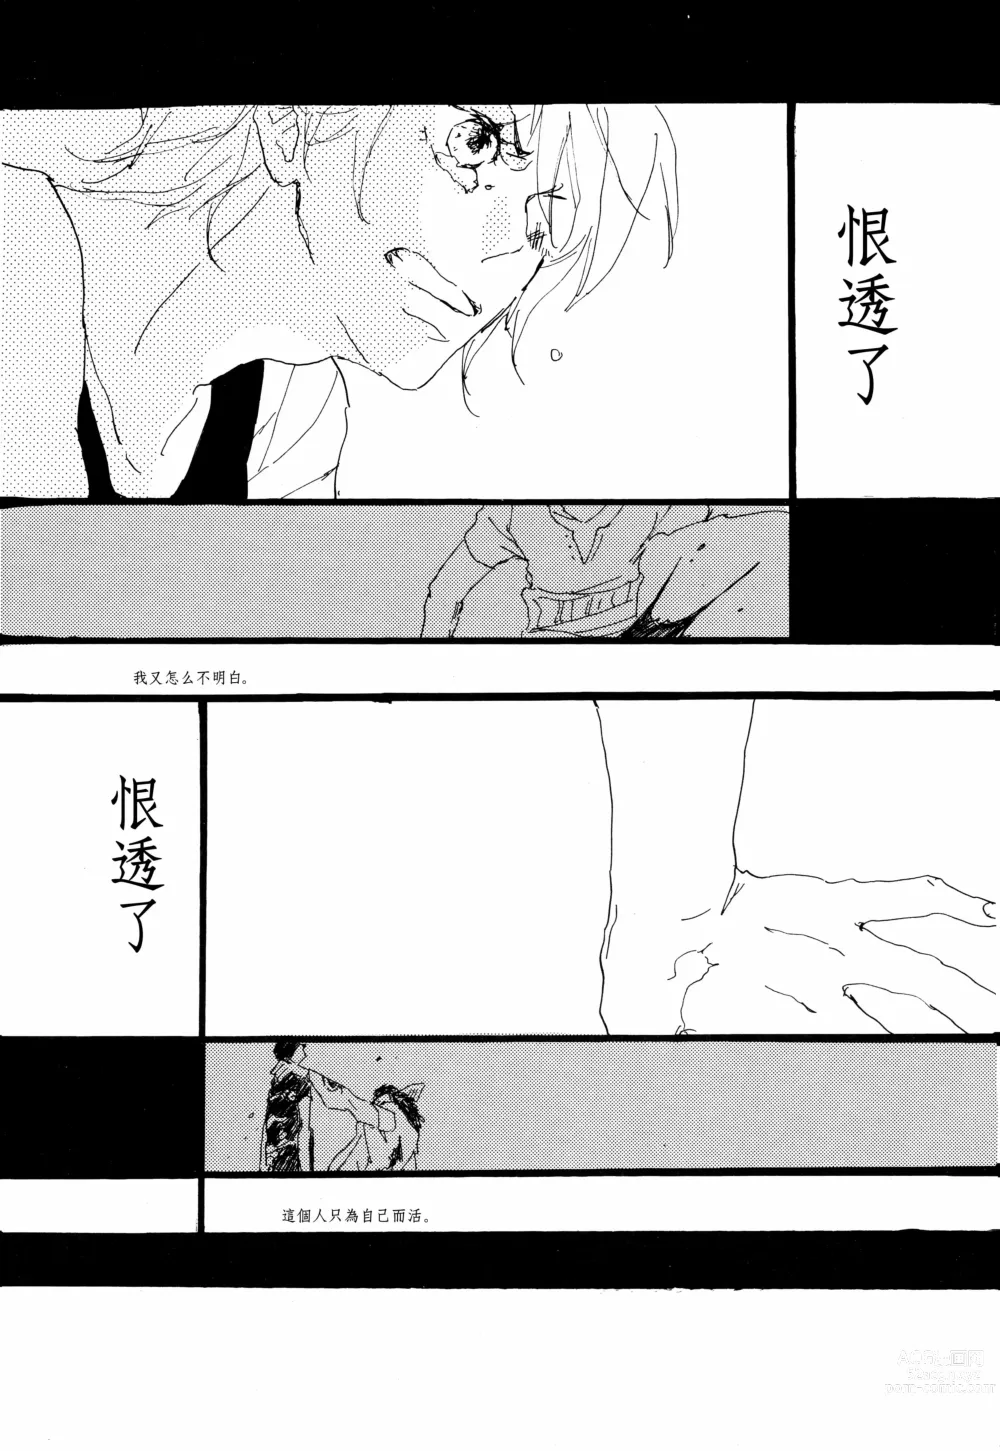 Page 36 of doujinshi Aquakiara